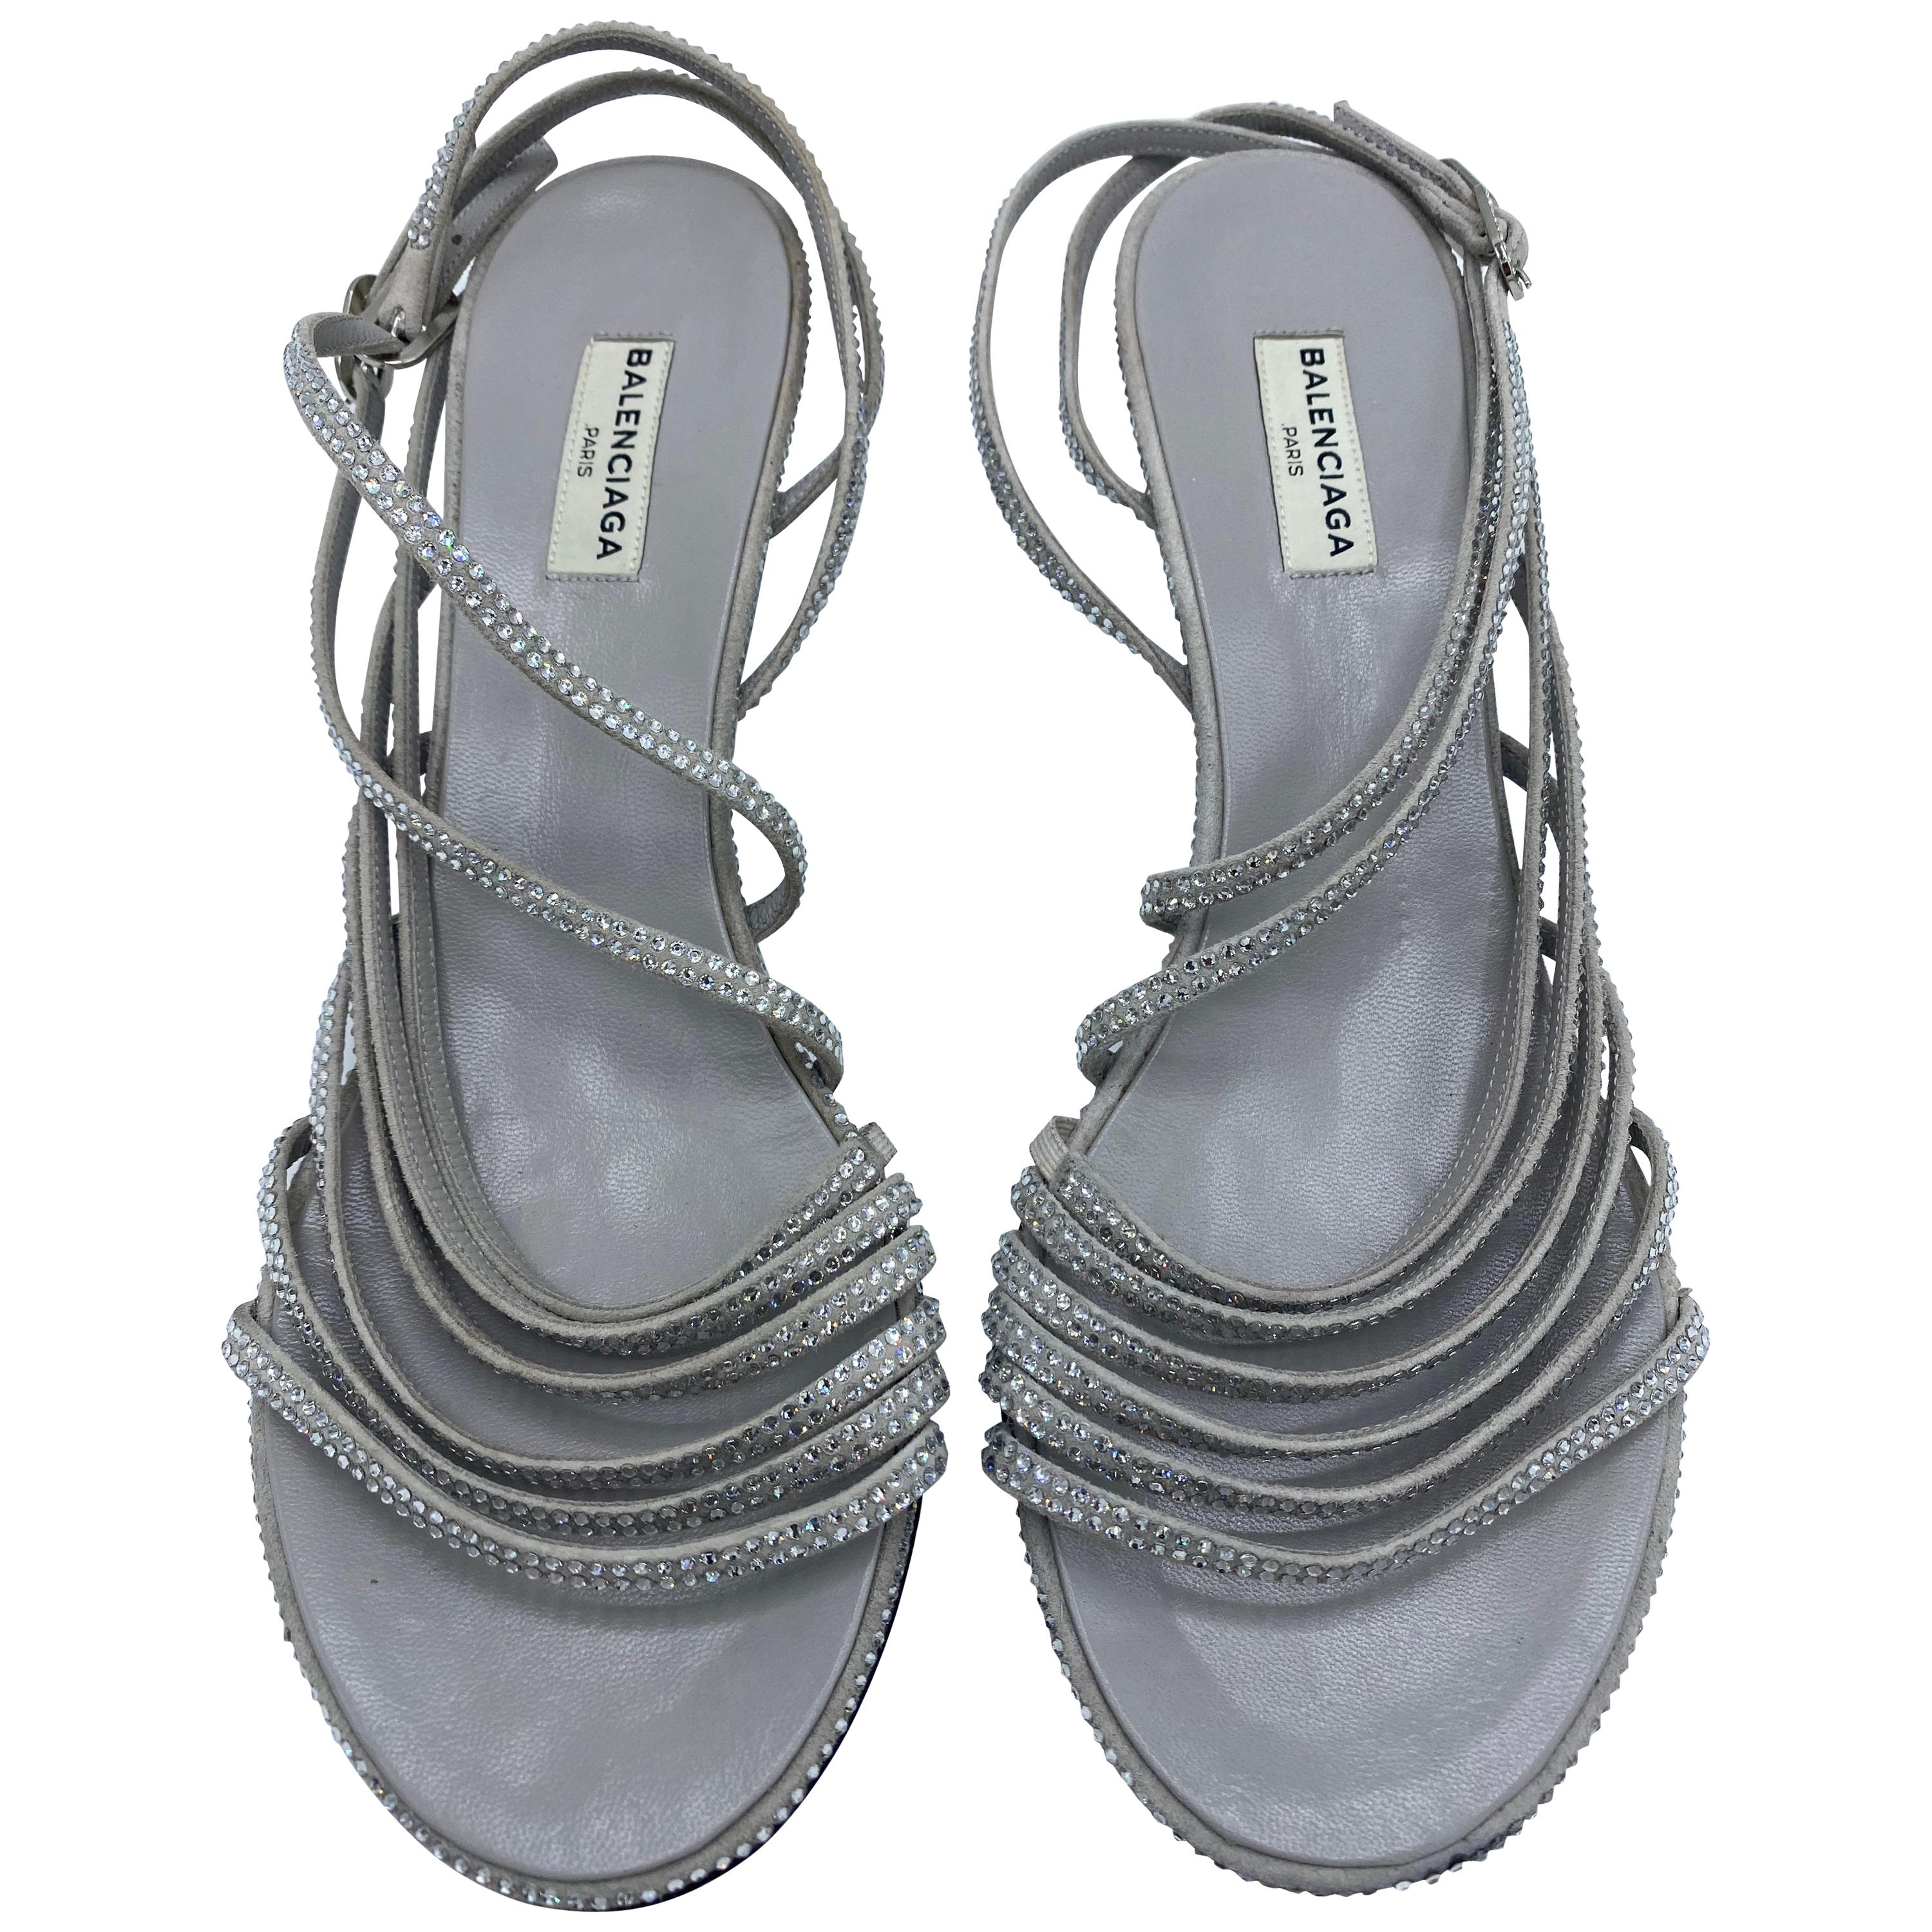 Balenciaga Crystal Embellished Grey Suede Strappy Heels Sandals Size 39 